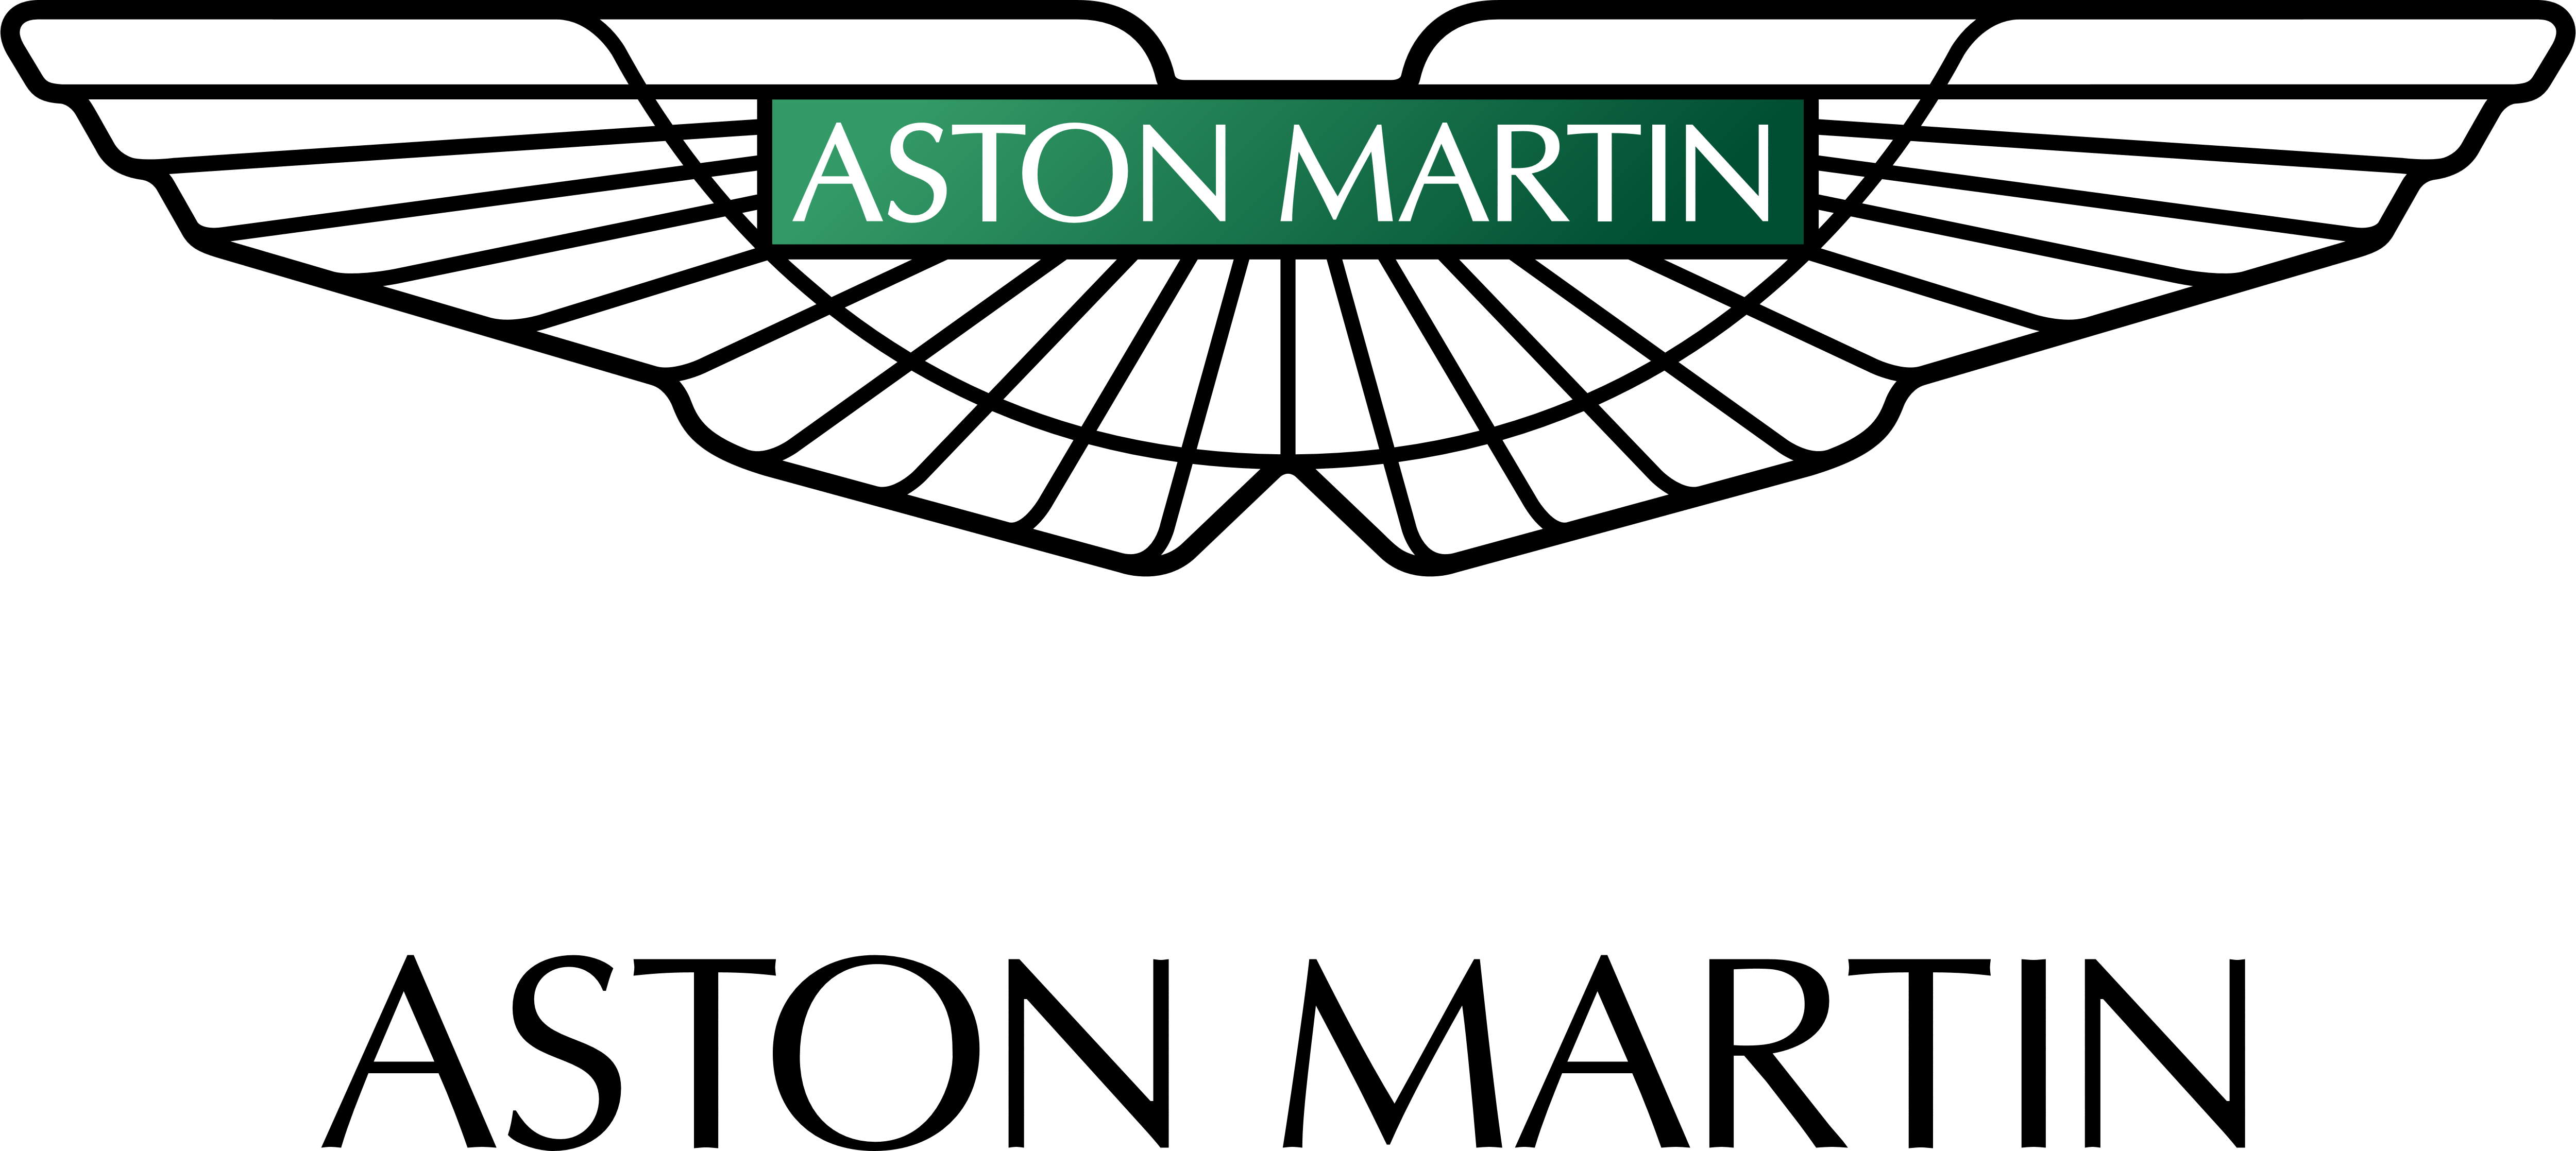 Aston Martin PNG Image Background